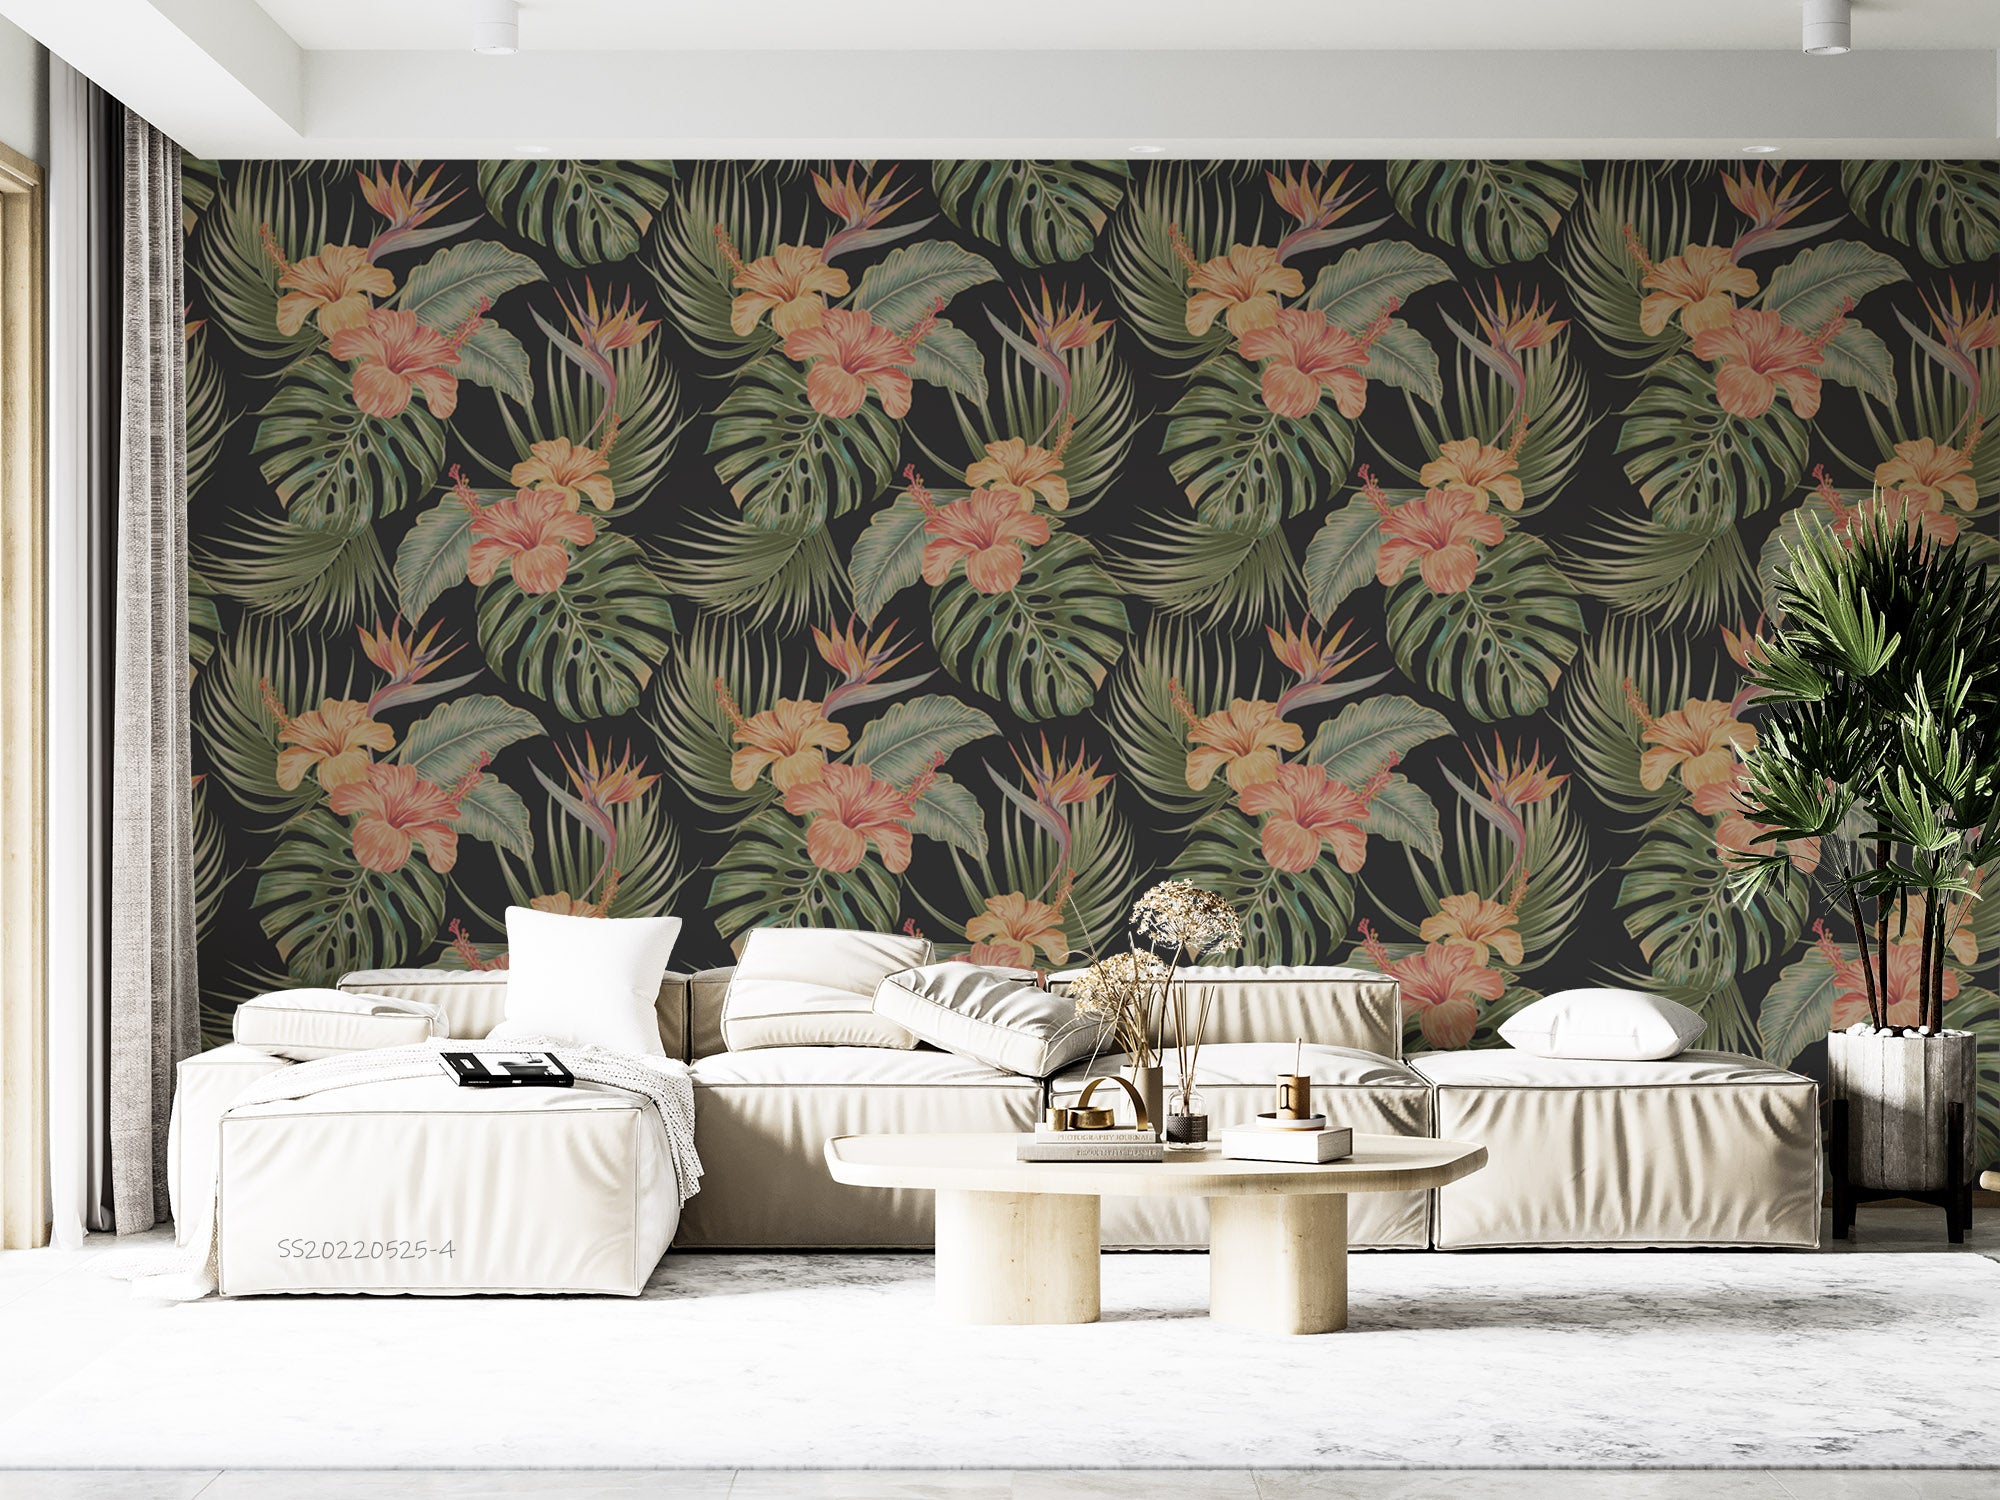 3D Vintage Tropical Leaf Floral Wall Mural Wallpaper GD 694- Jess Art Decoration